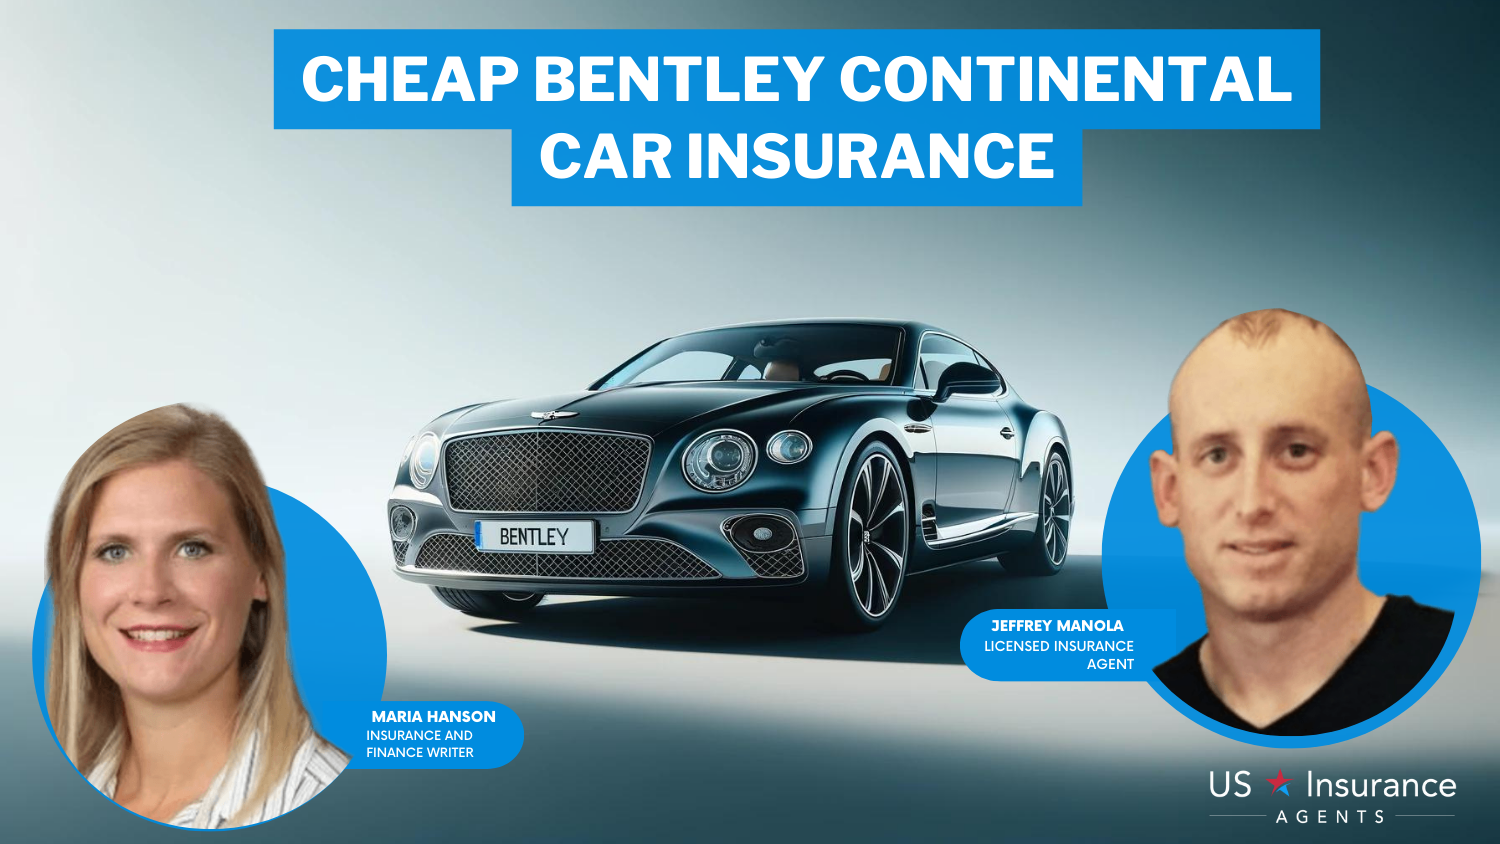 Cheap Bentley Continental Car Insurance: Allstate, Farmers, and Progressive